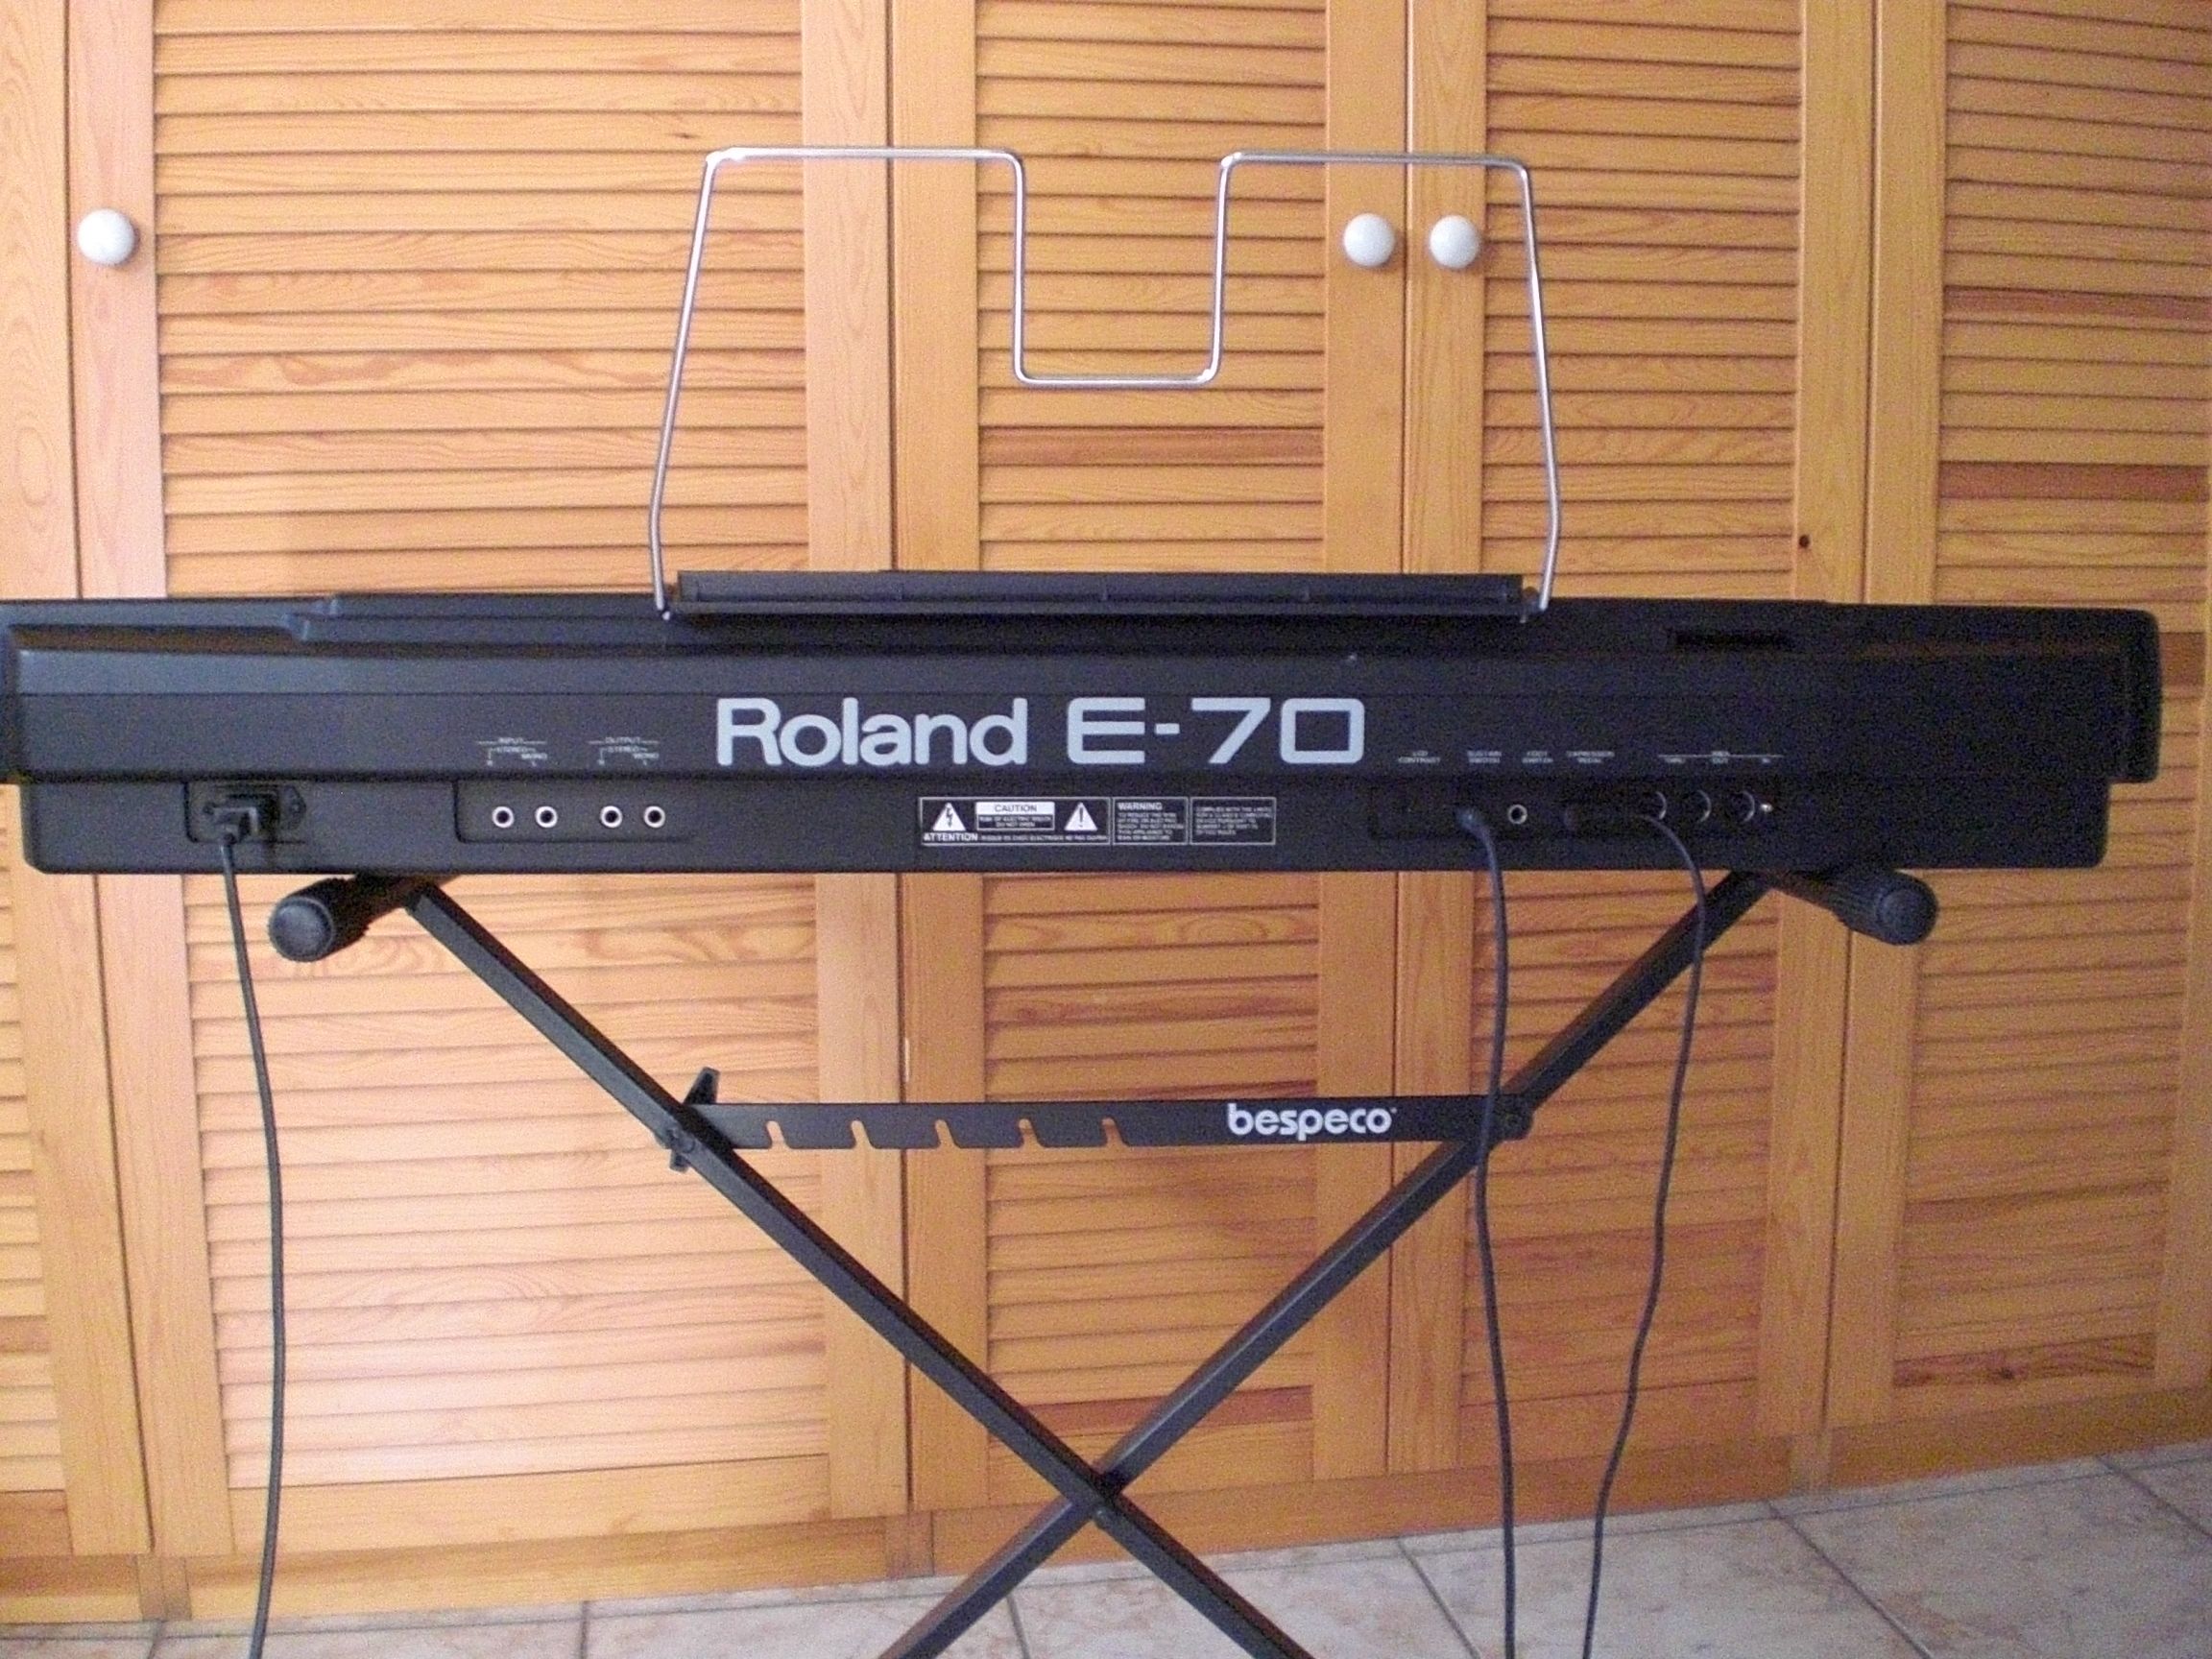 Roland E-70 image (#514805) - Audiofanzine